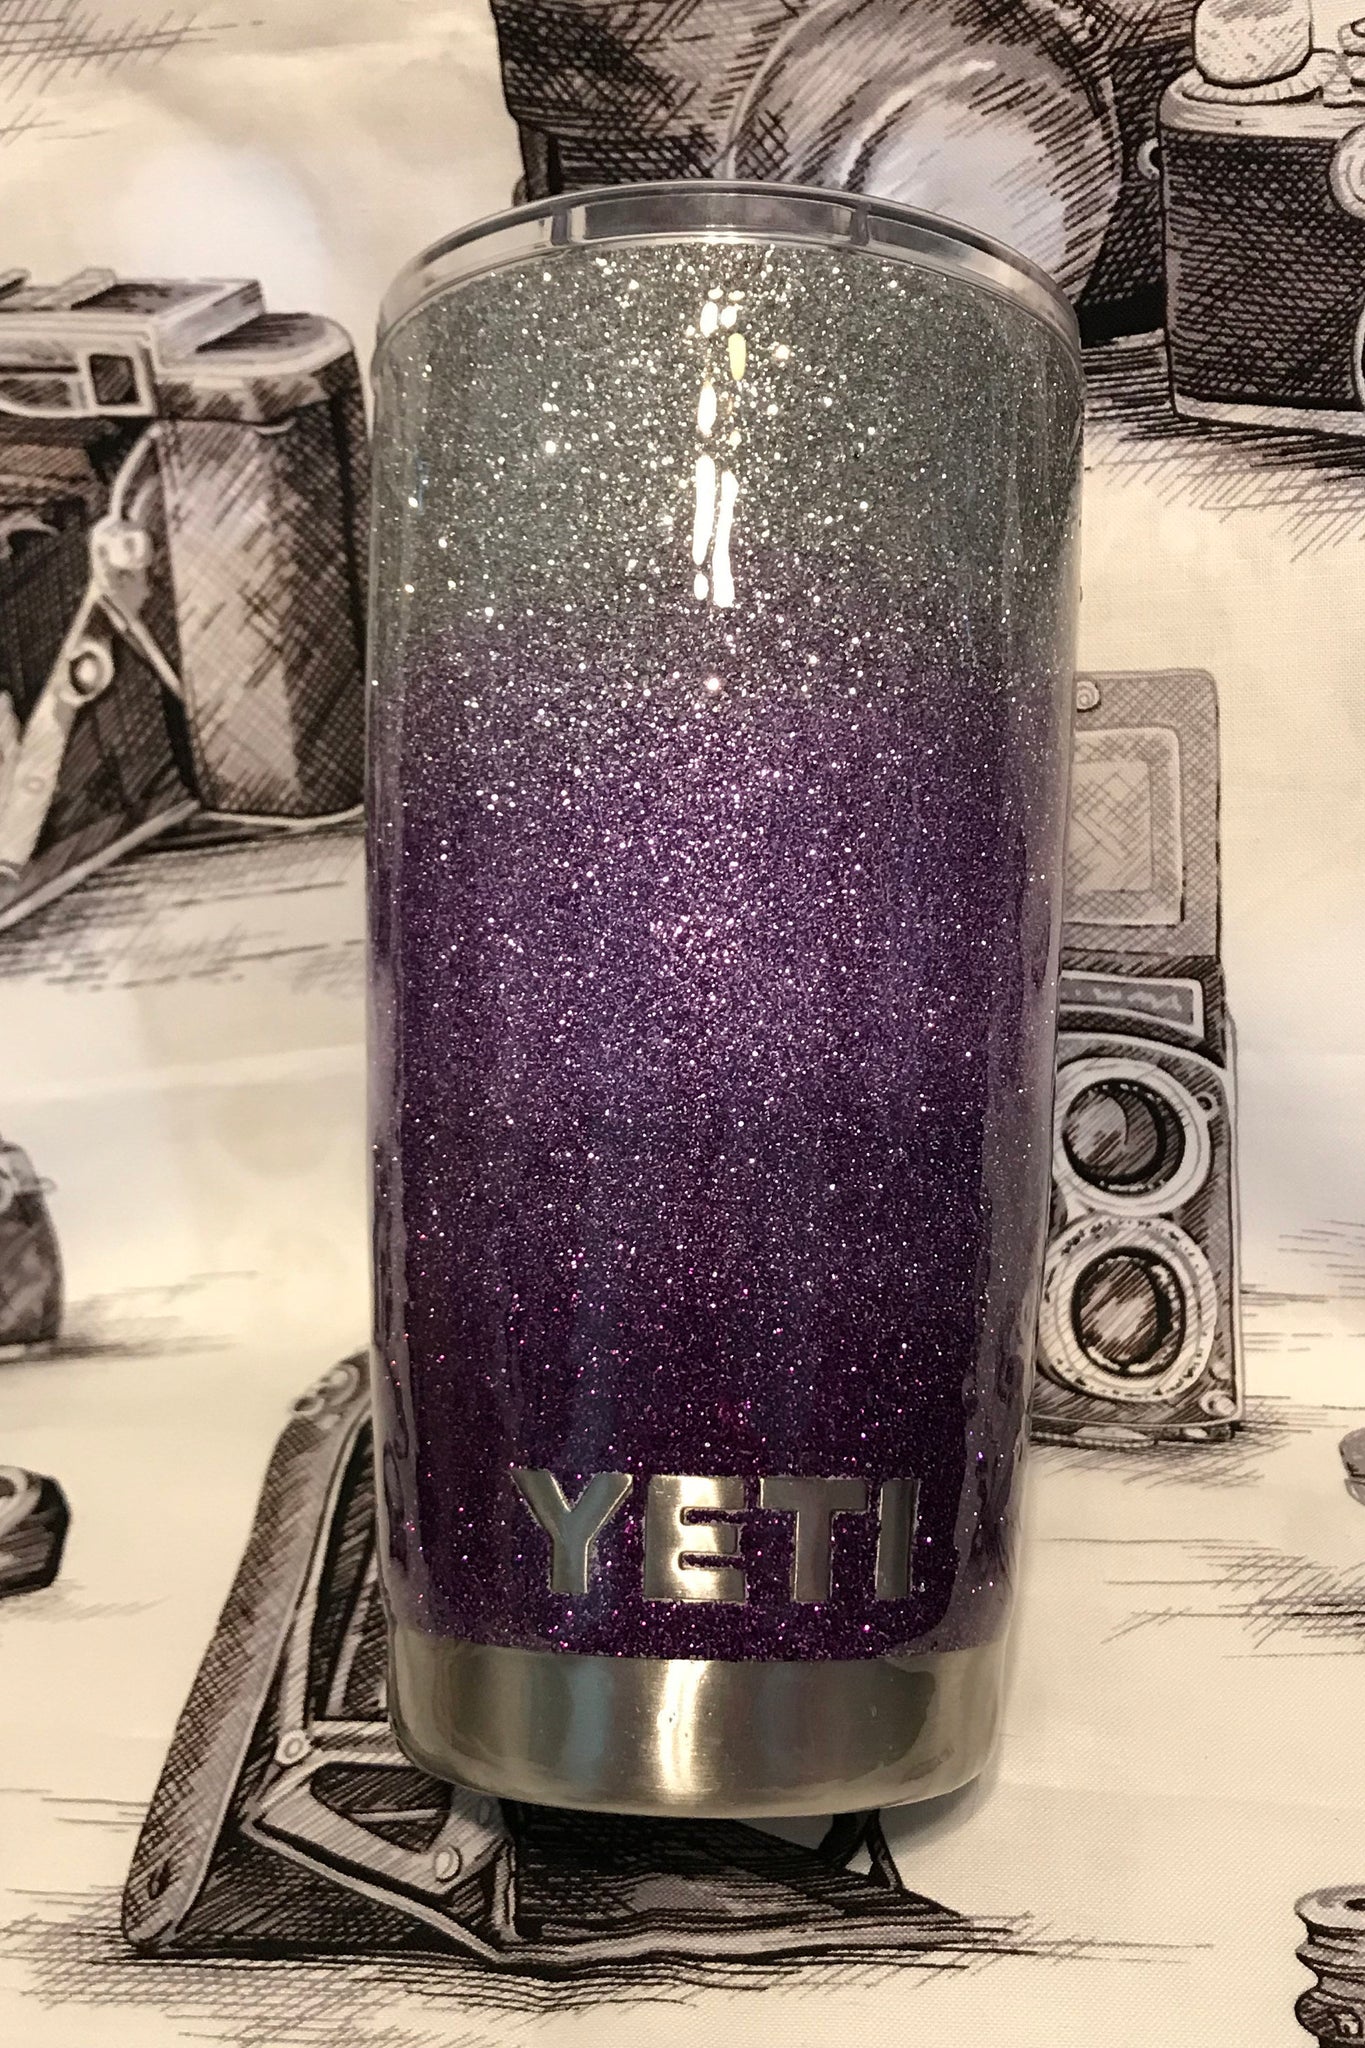 Yeti Purple Rain Crystal Cup 